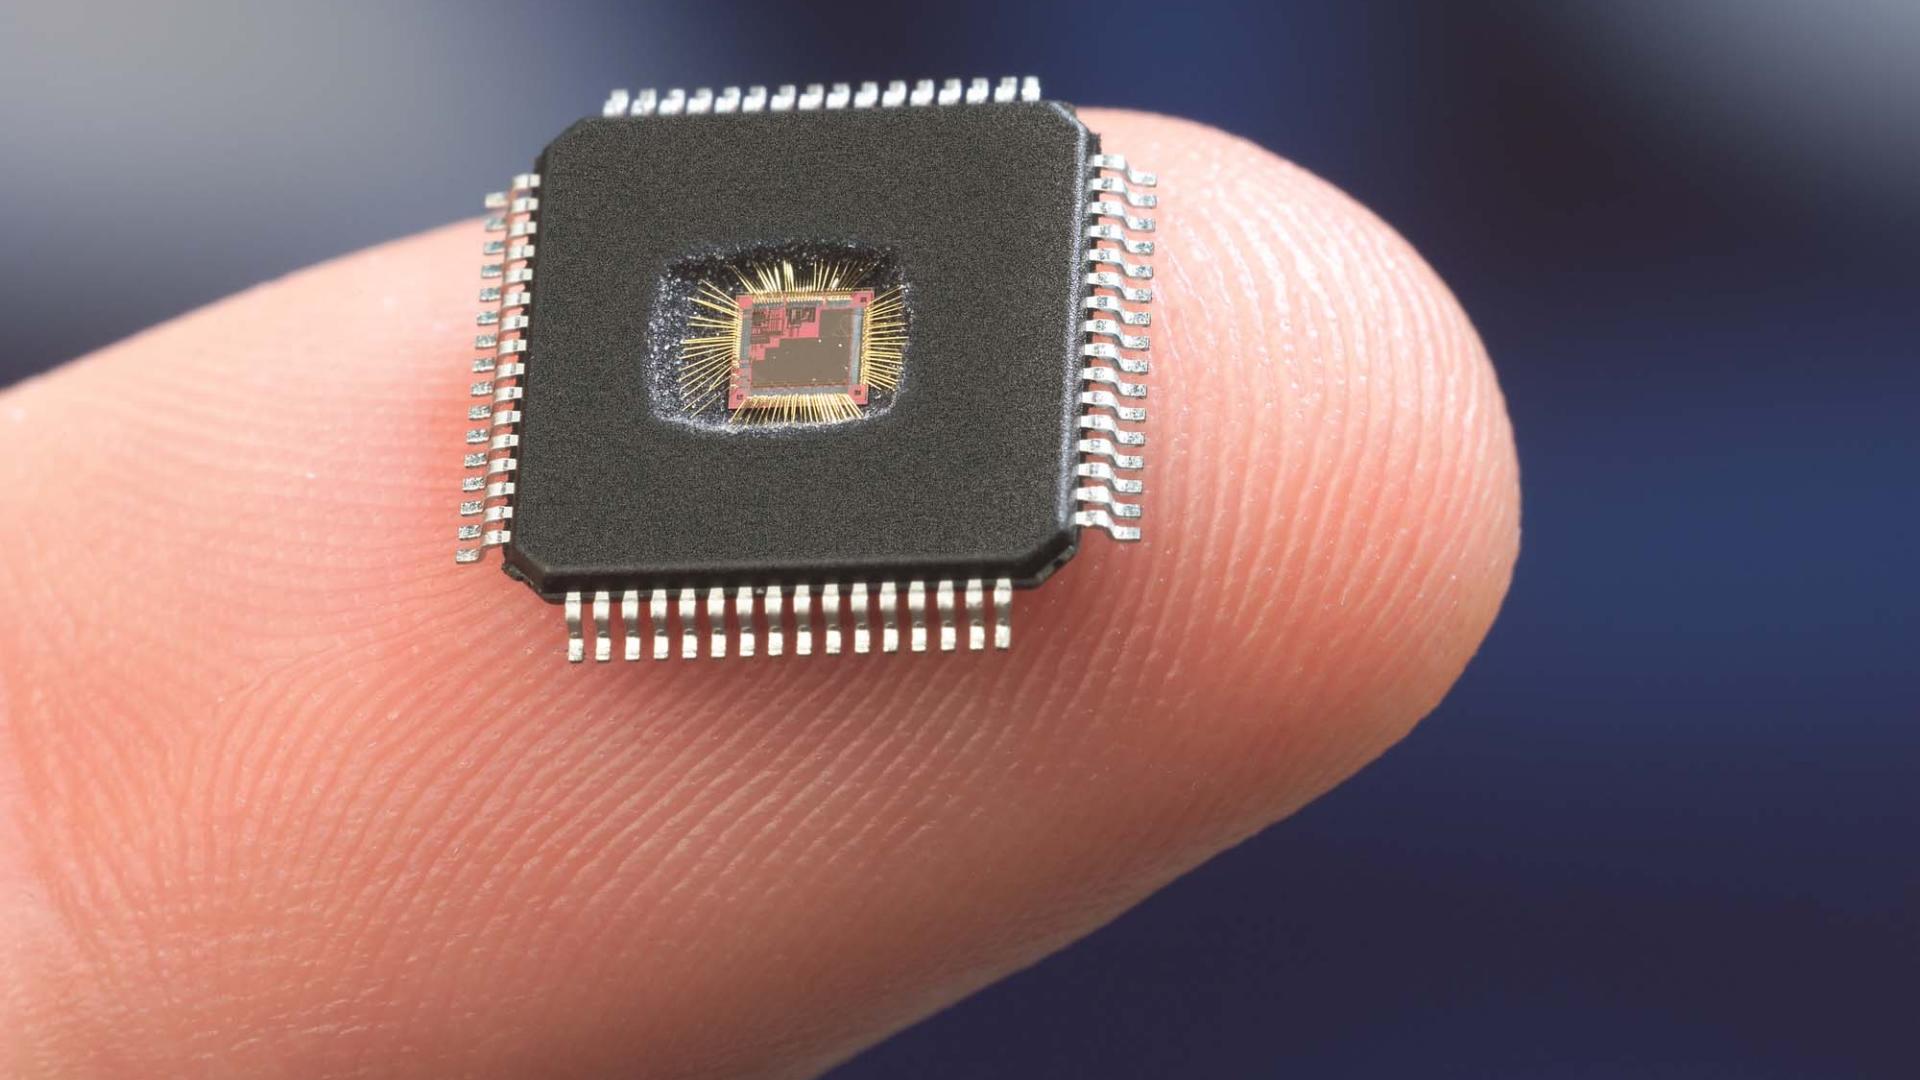 Fingertip holds microchip 